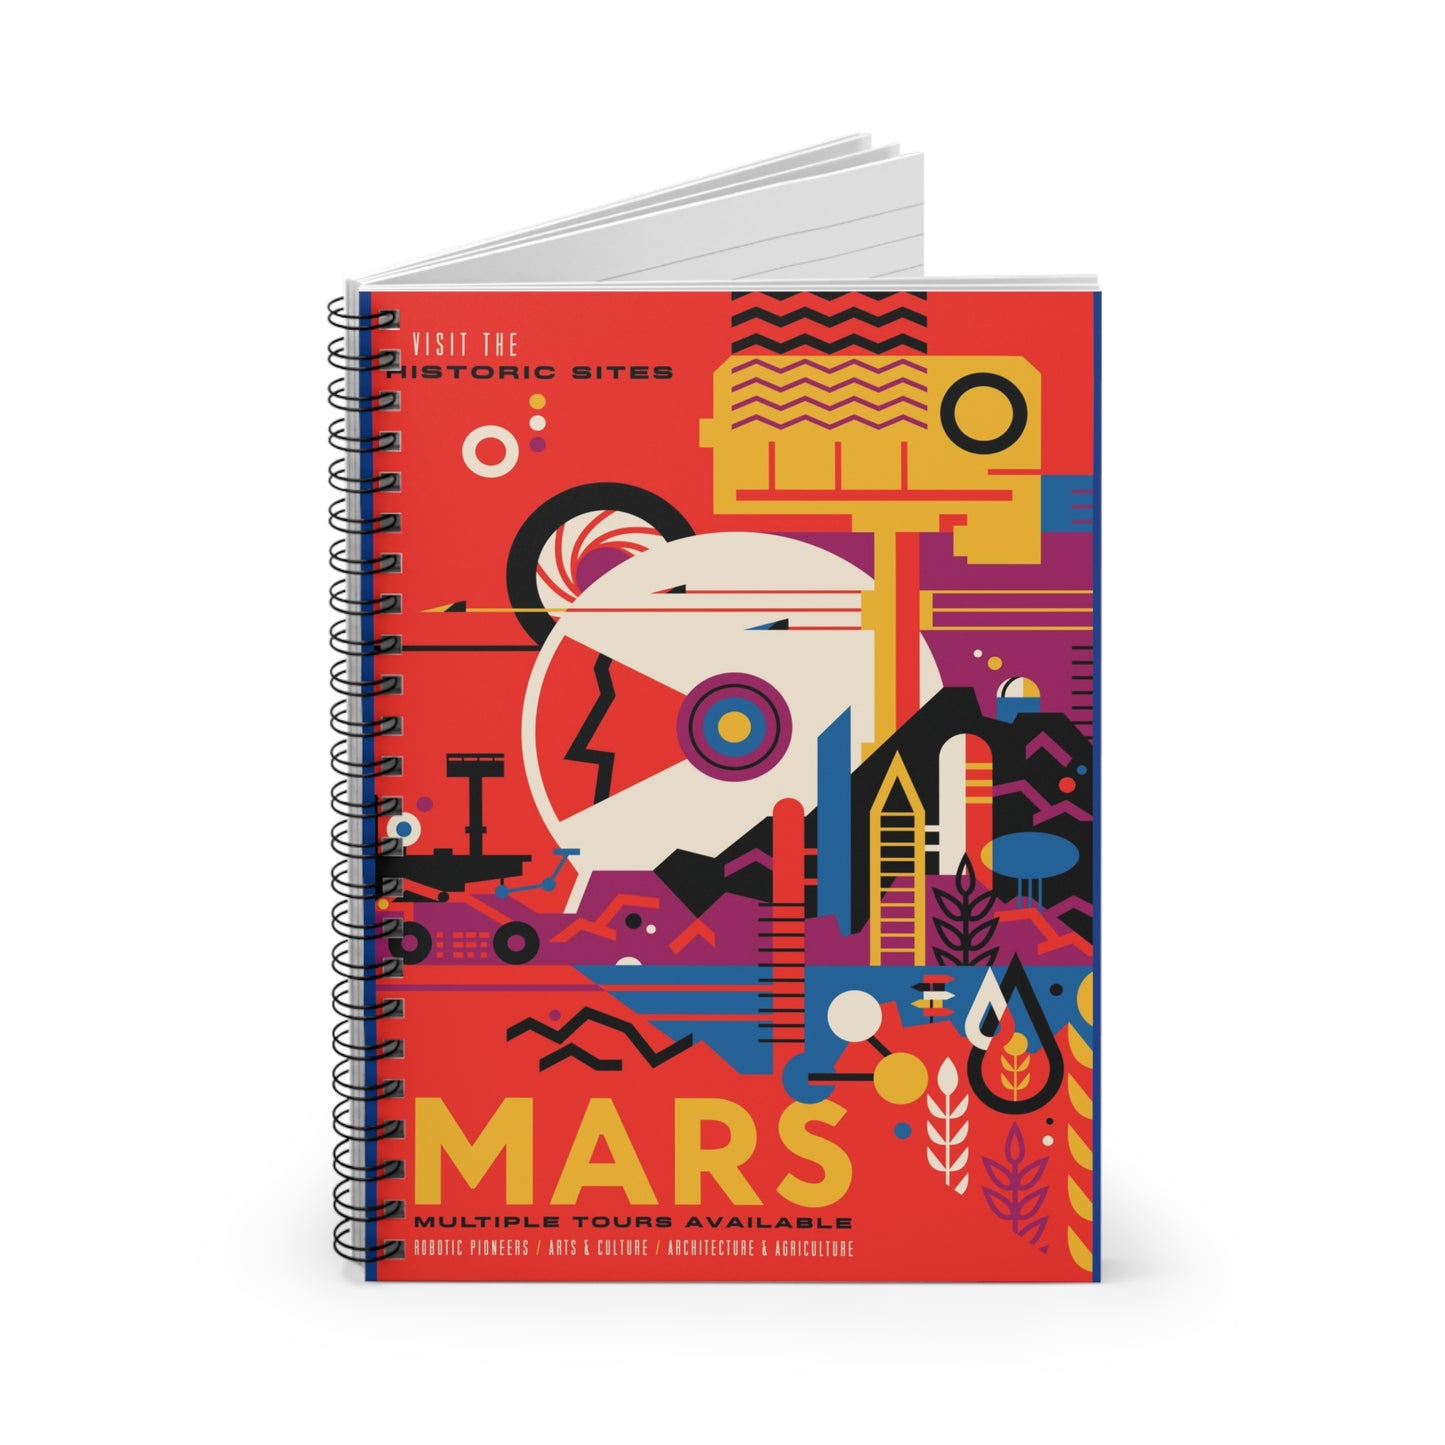 Retrofuturist Mars Space Tourism Spiral Notebook - Ruled Line